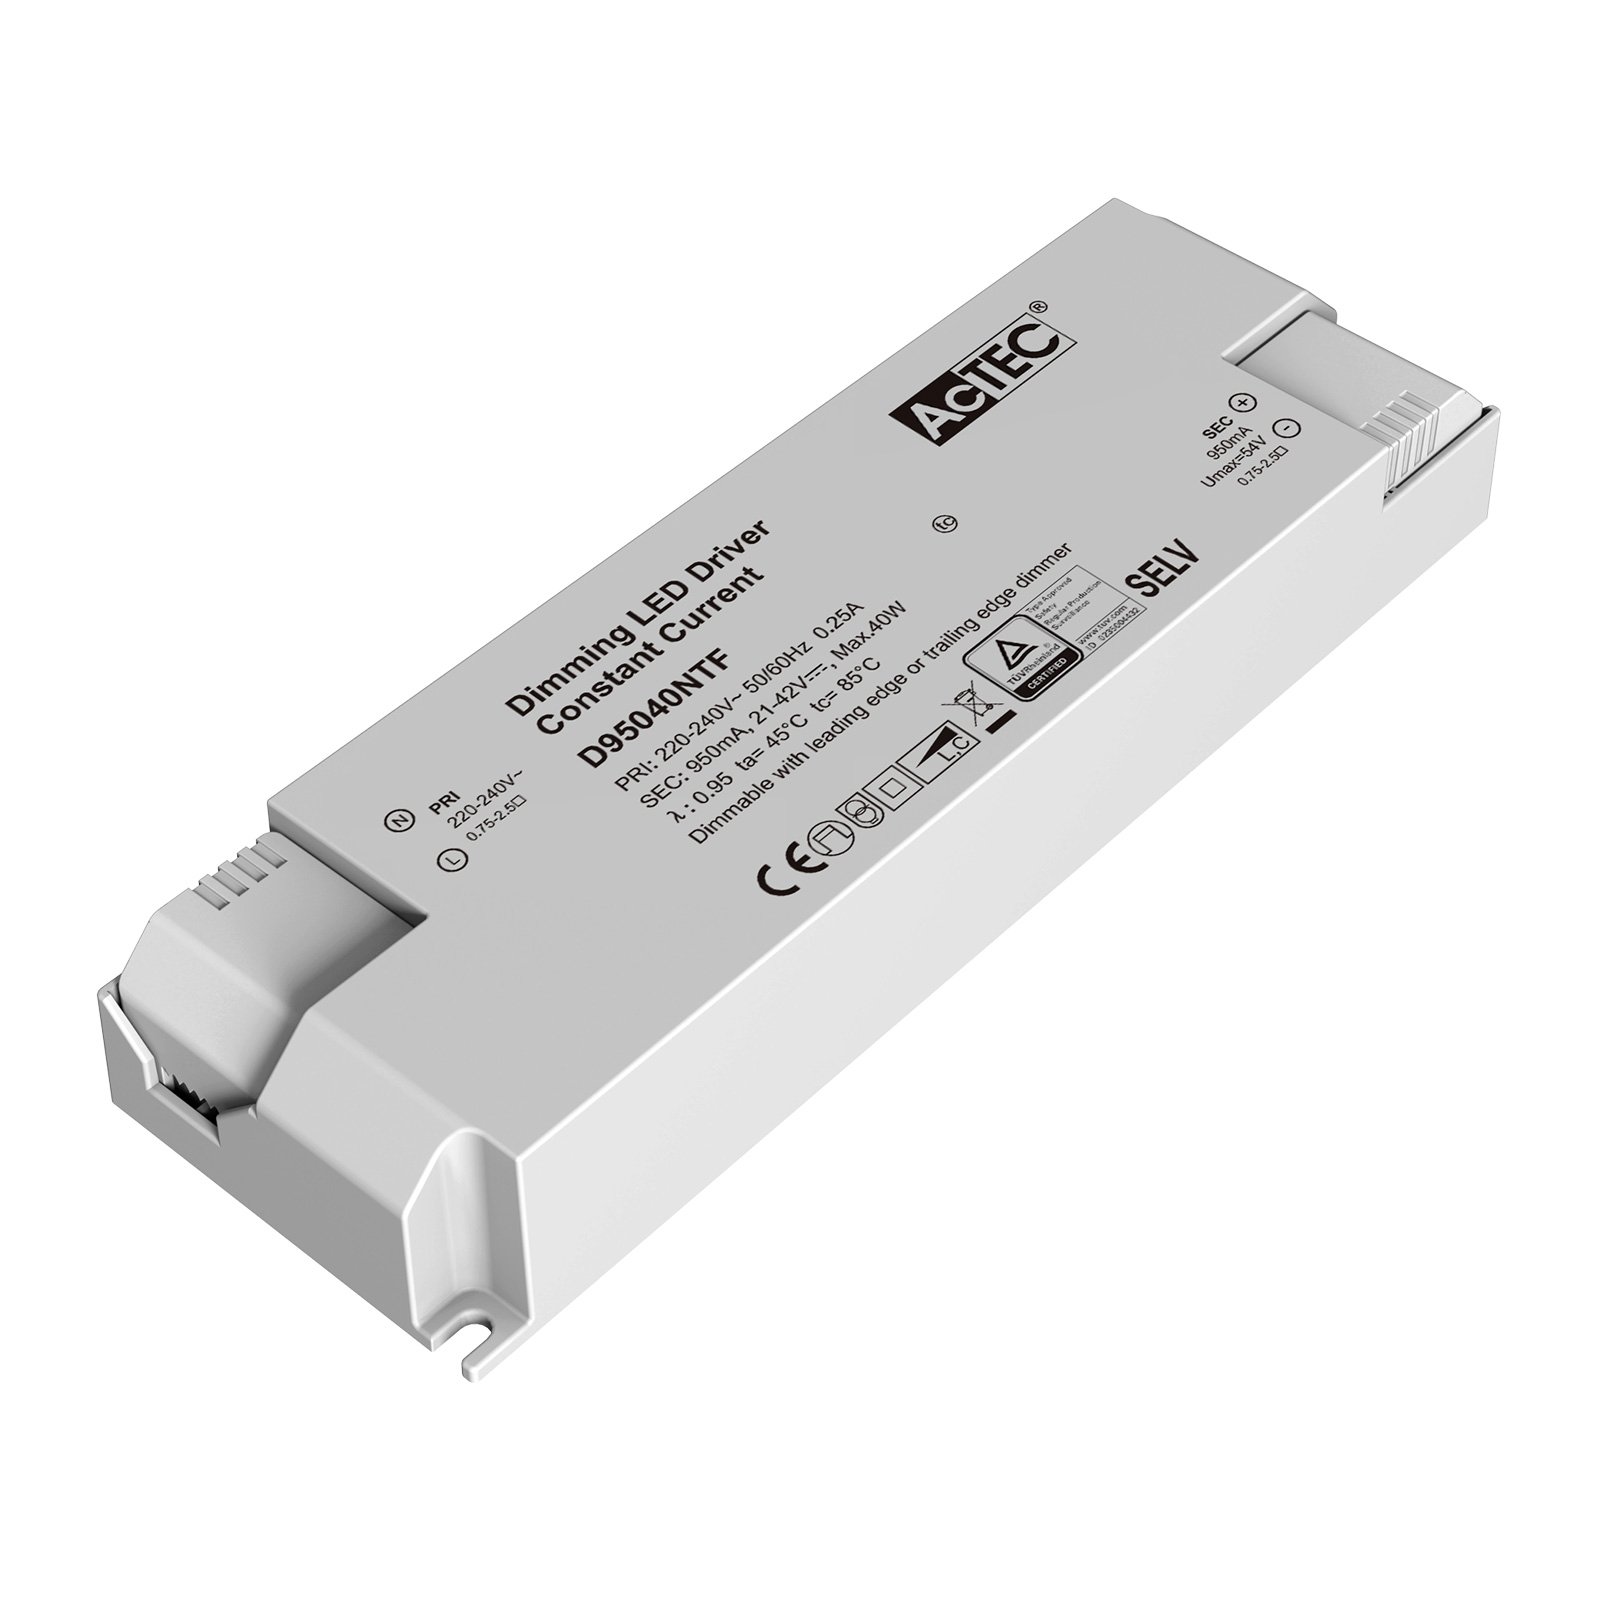 AcTEC Triac LED vezérlő CC max. 40W 950mA